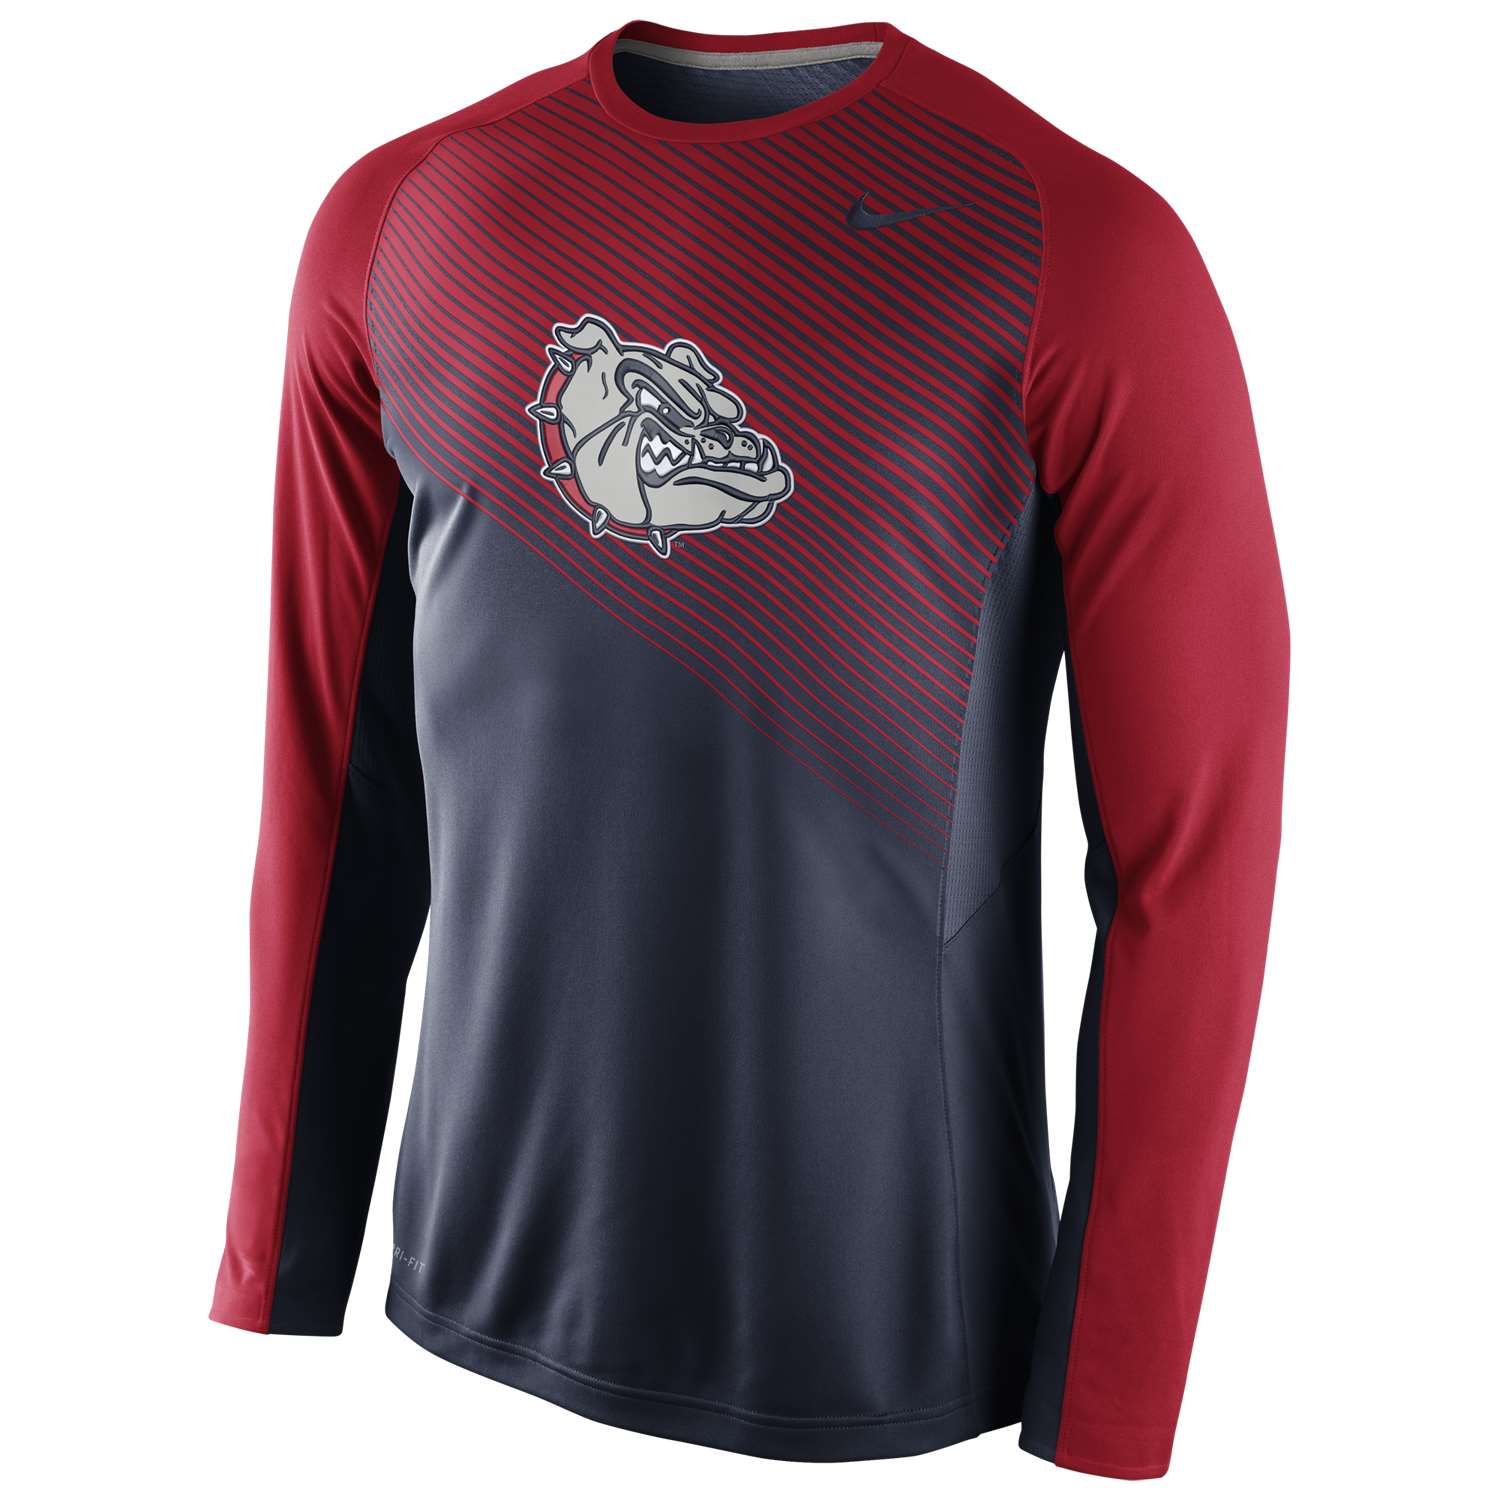 Nike Gonzaga Bulldogs Basketball Legend T-Shirt 